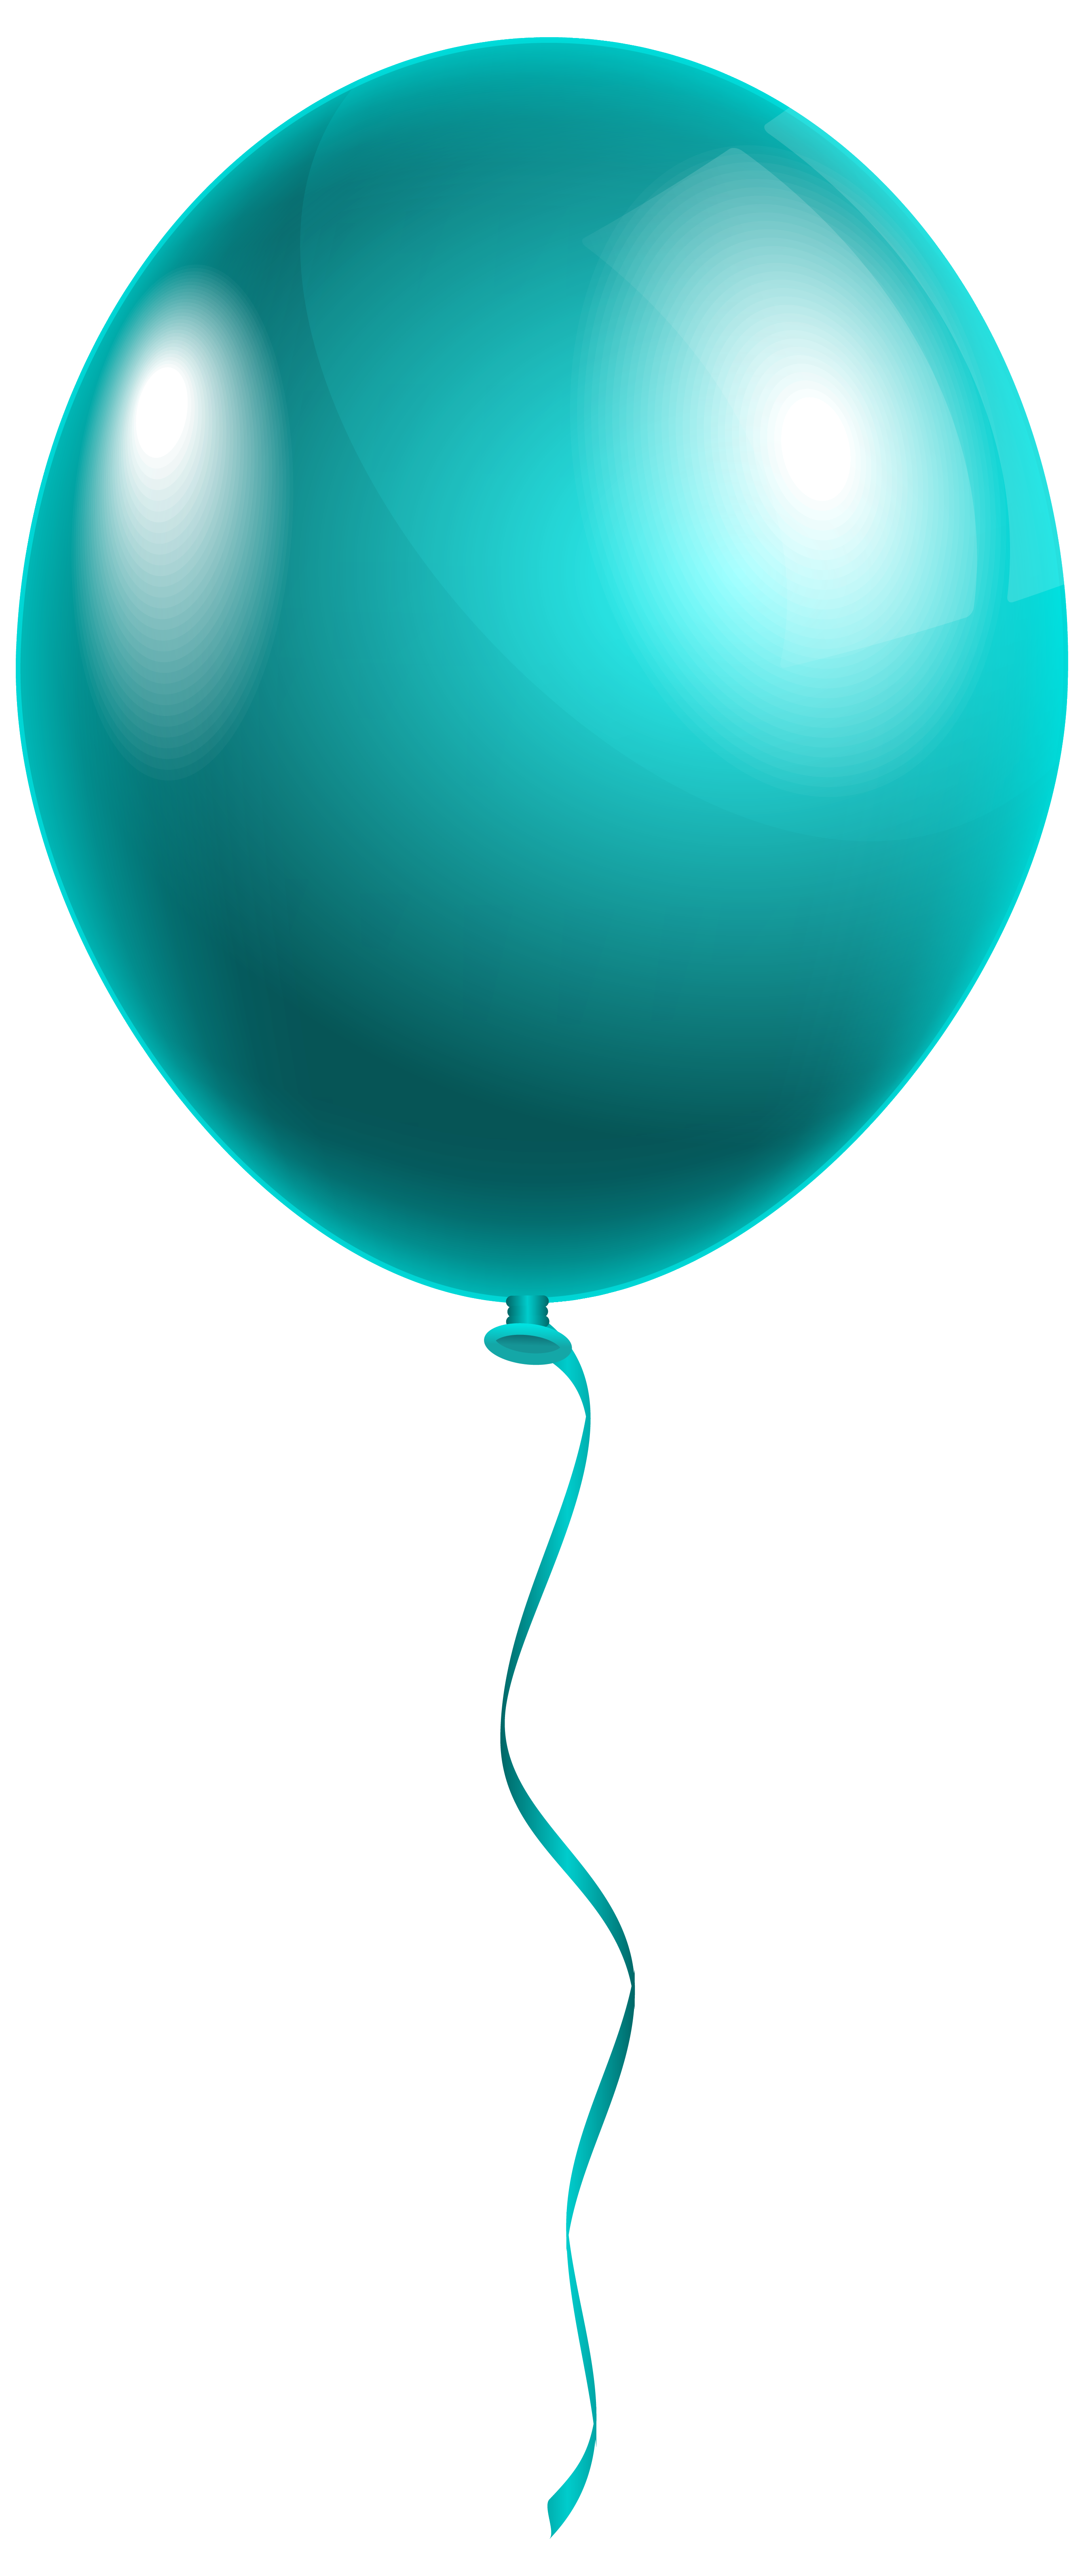 Clipart balloons navy blue. Single modern balloon png